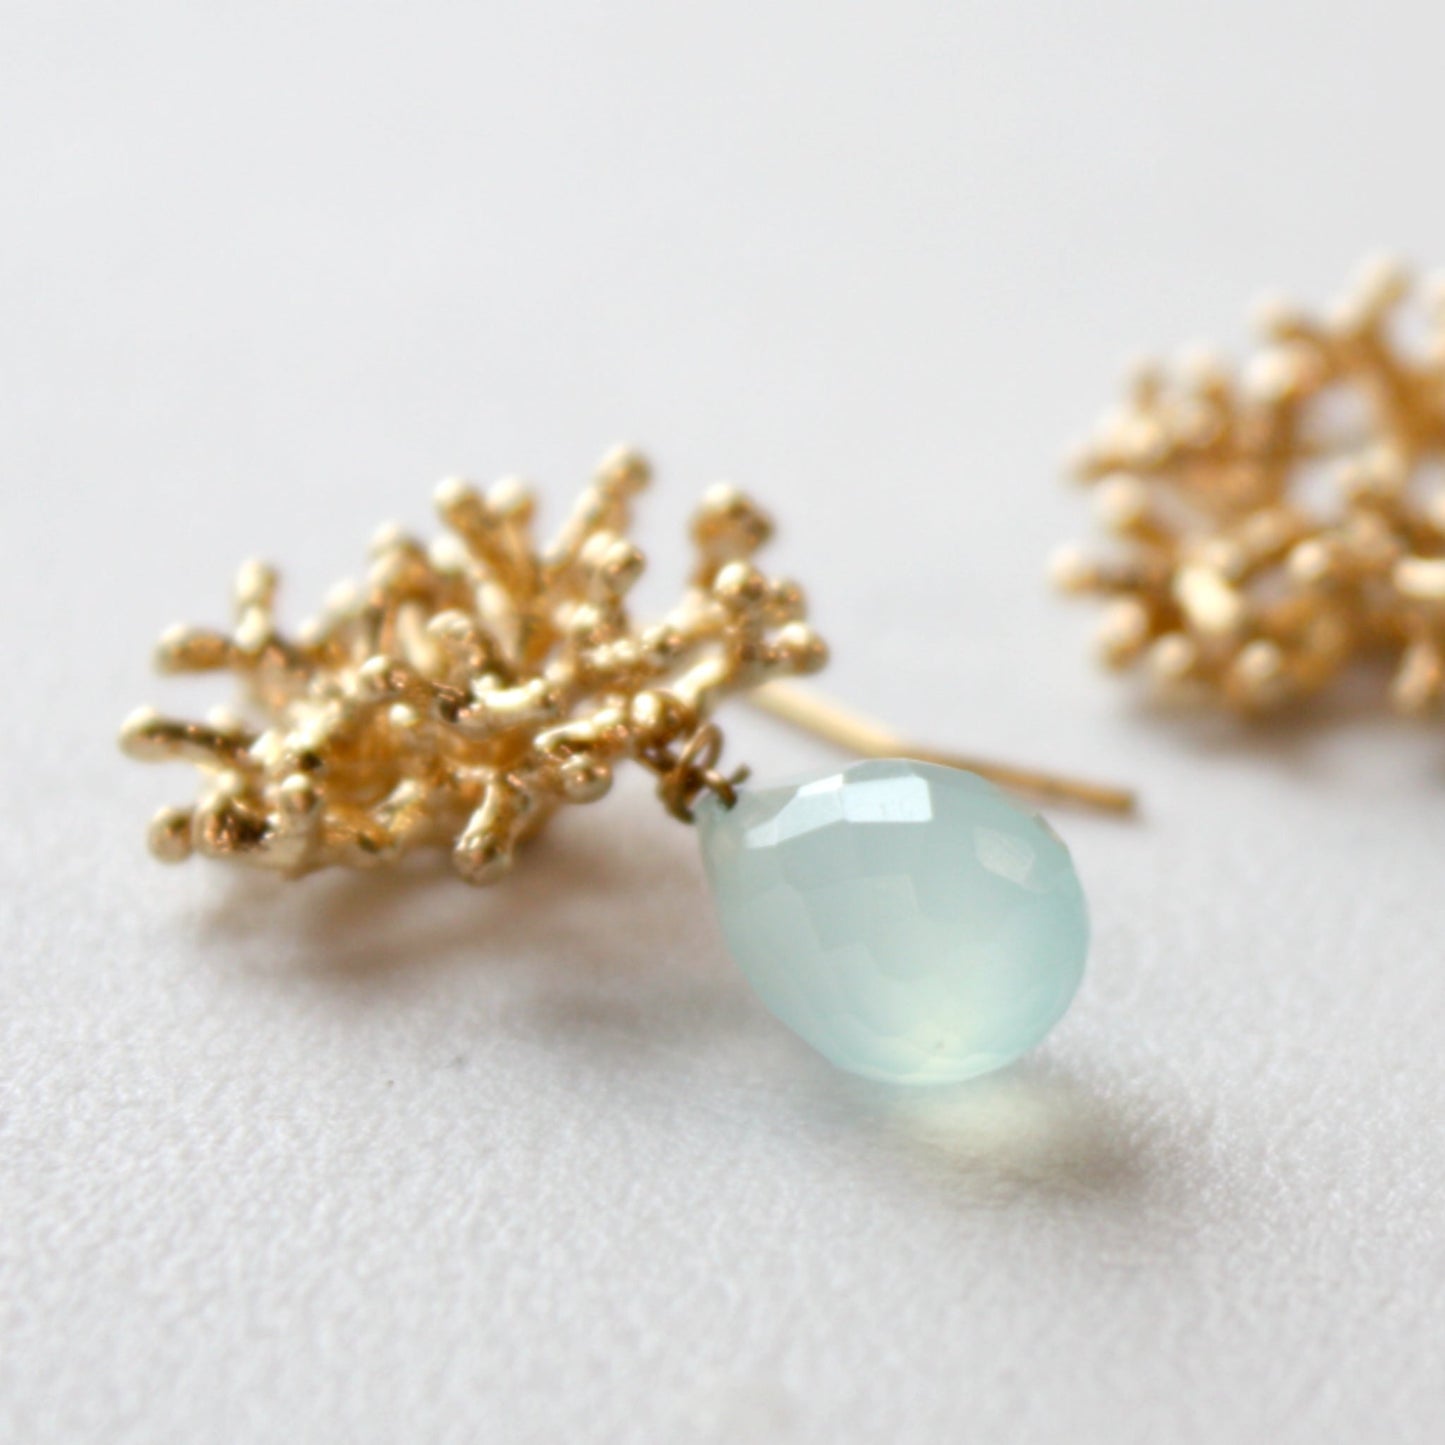 Gemstone Gold Coral Boho Dangle Earrings - Made in the USA